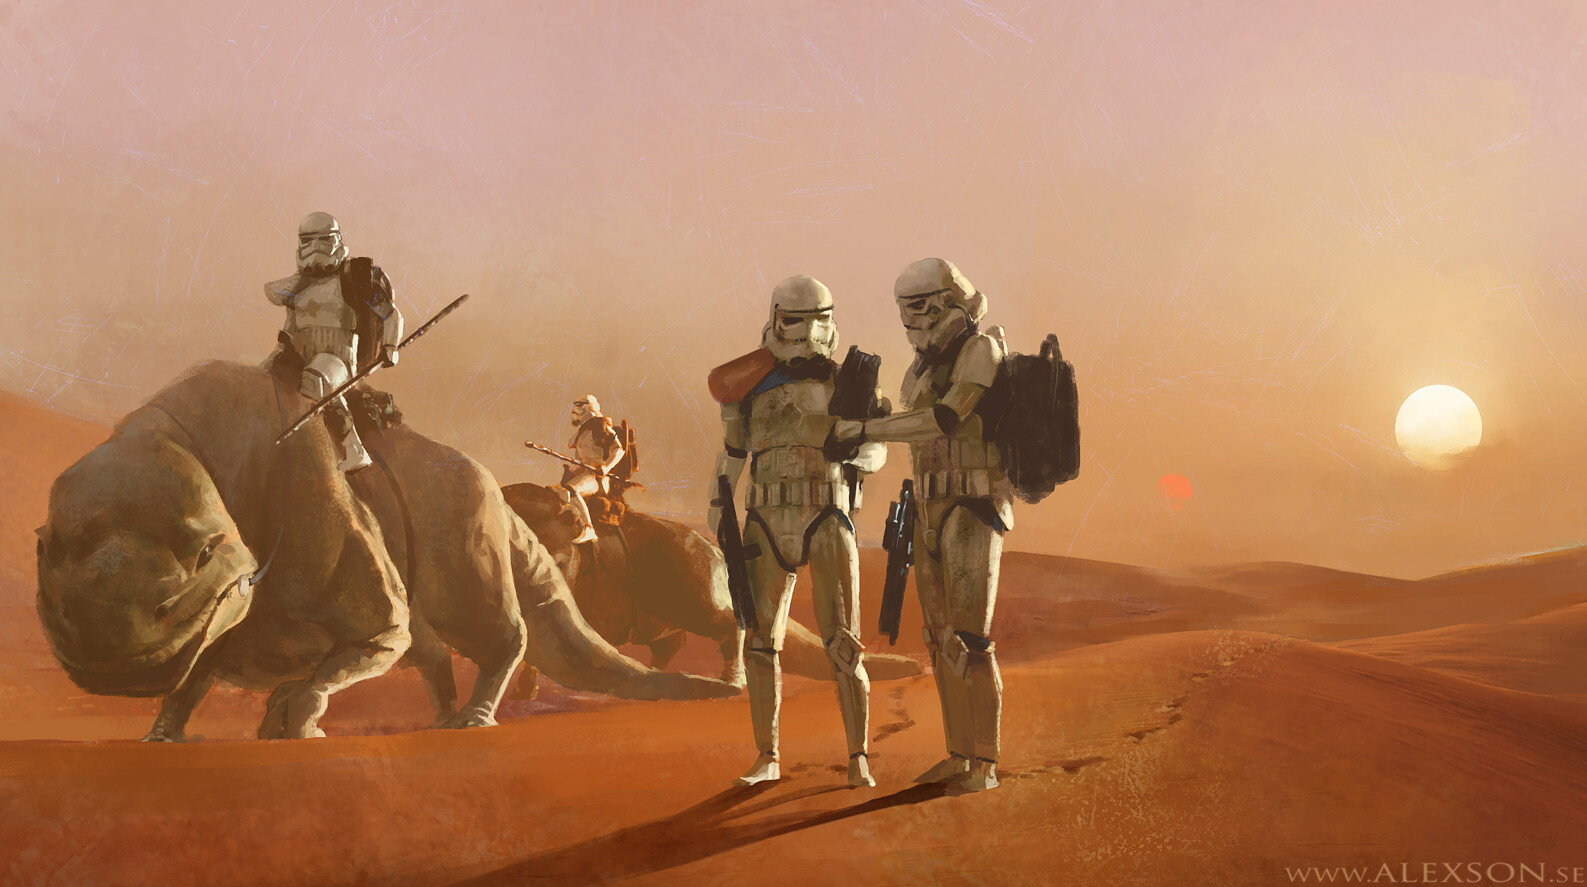 Sci Fi Star Wars Art by Alexander Forssberg